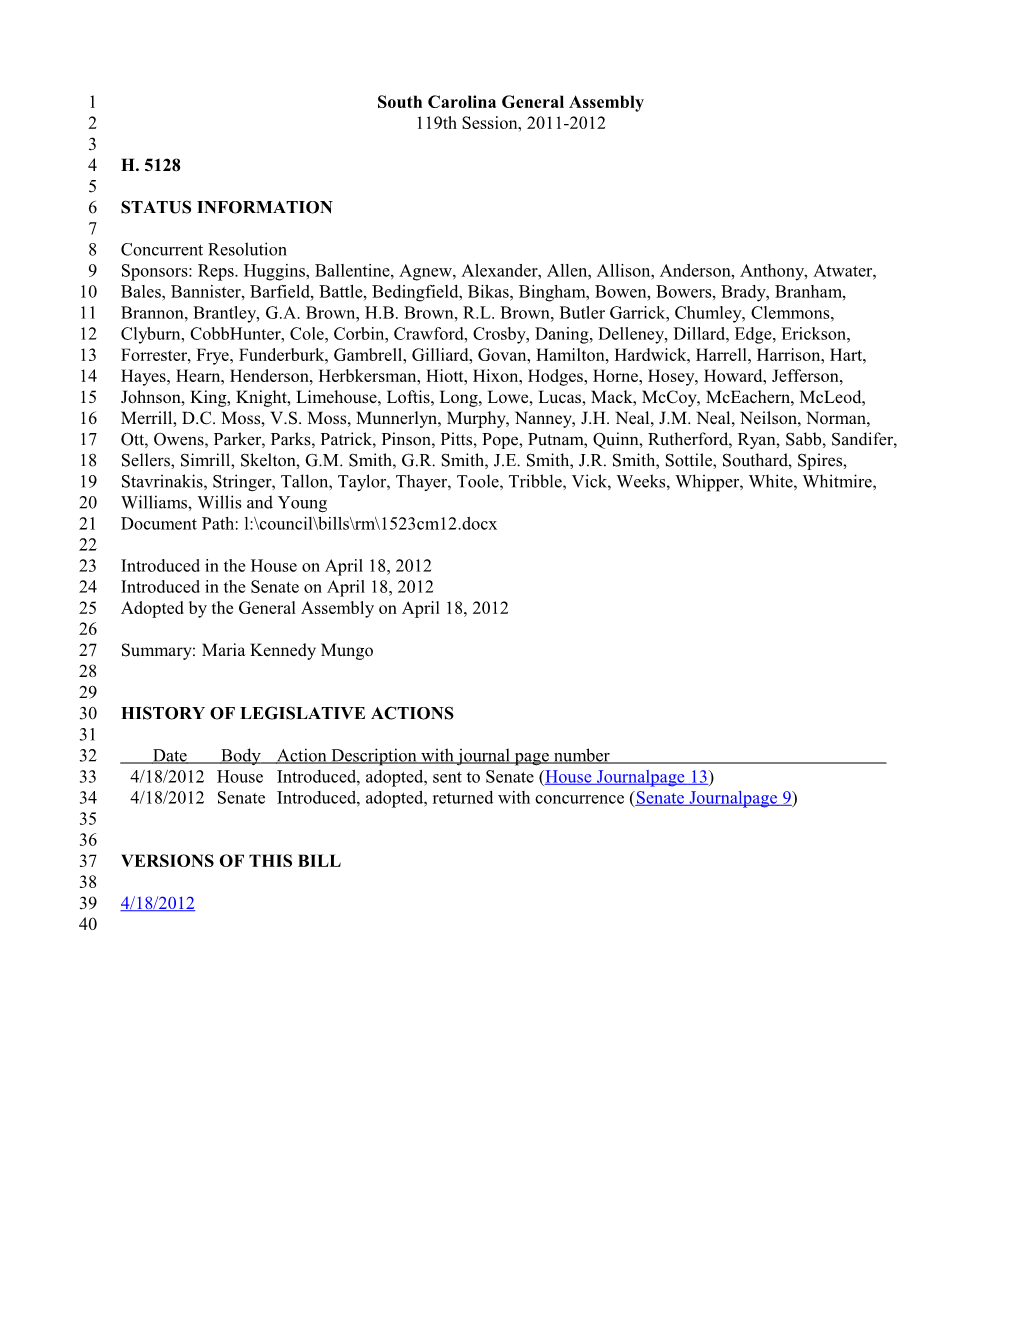 2011-2012 Bill 5128: Maria Kennedy Mungo - South Carolina Legislature Online